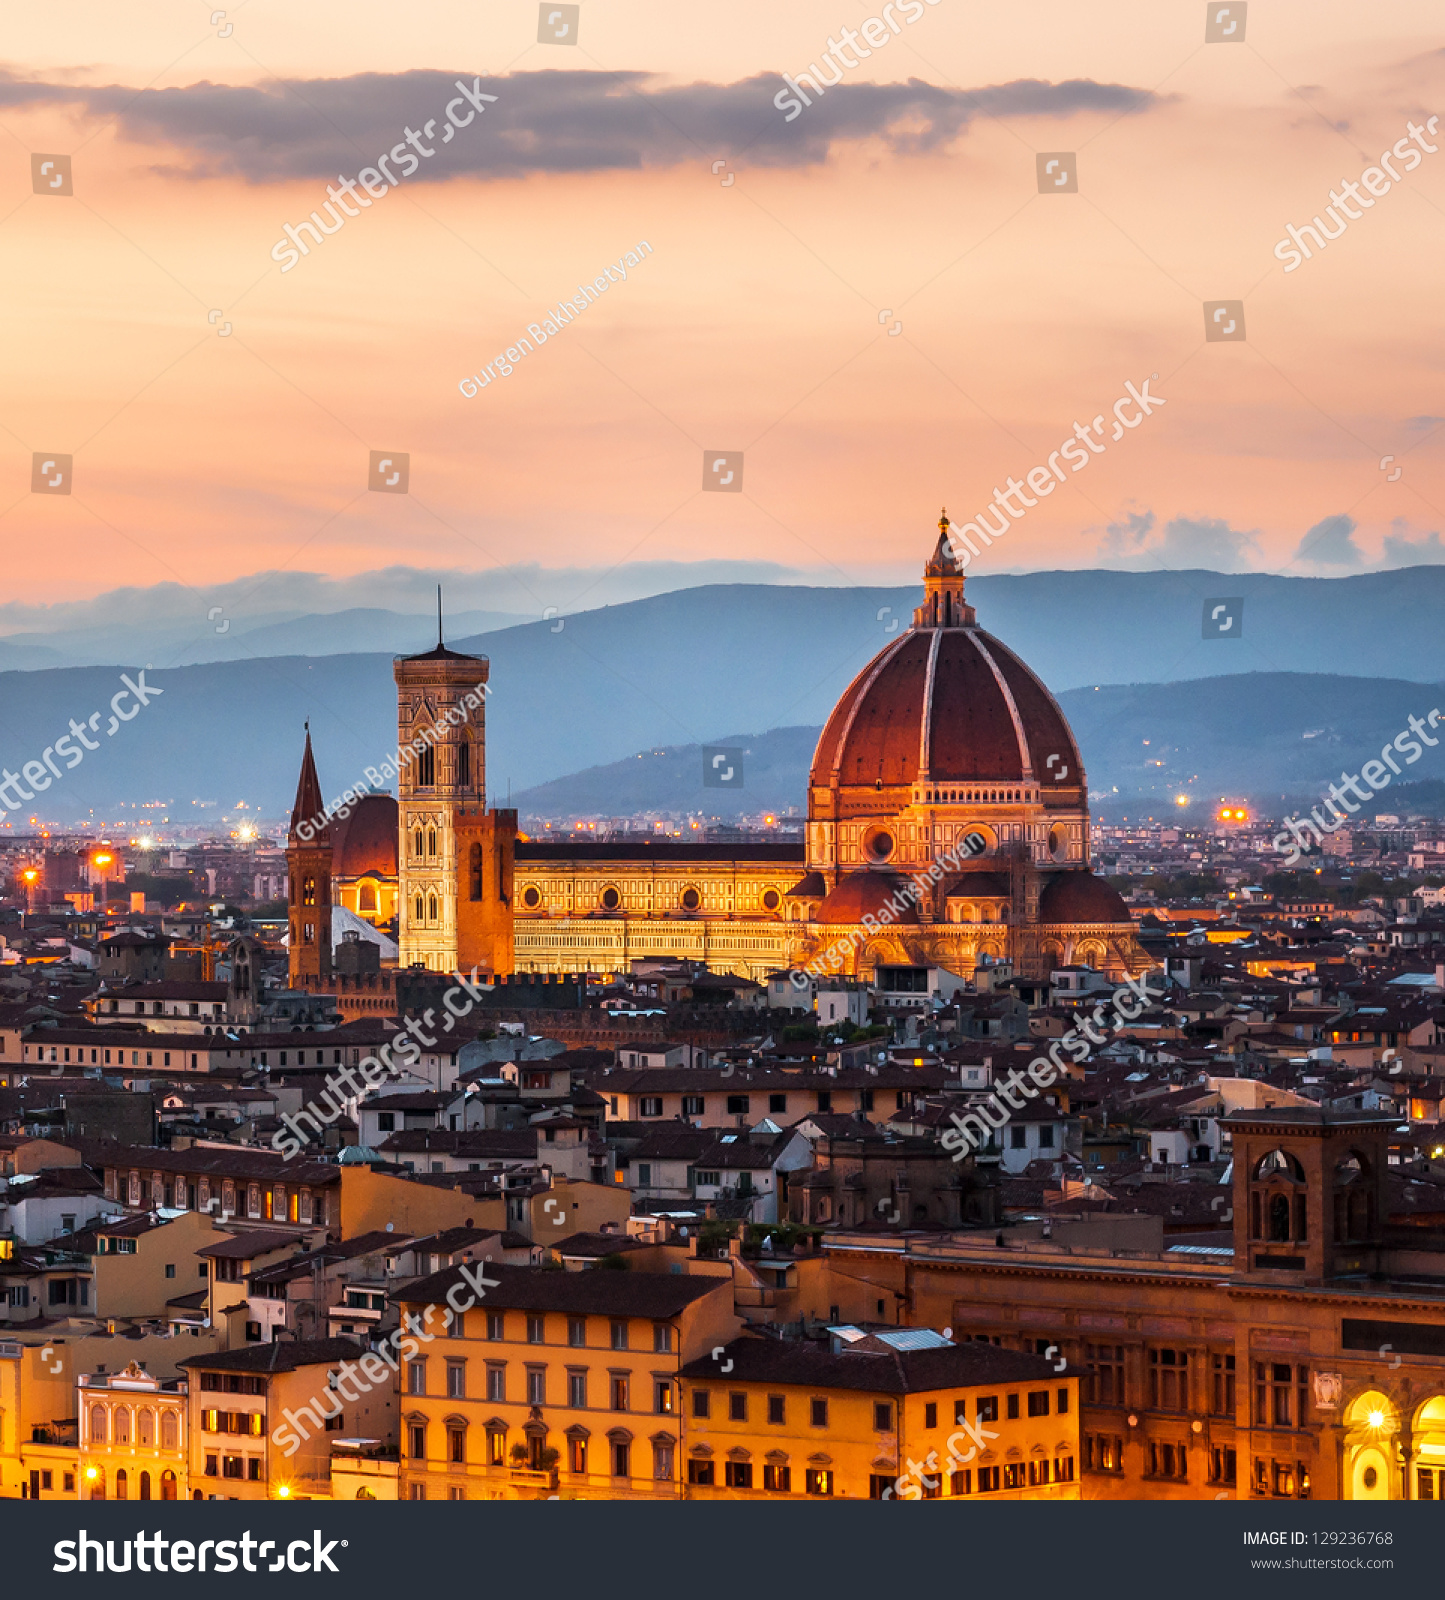 Cathedral of Santa Maria del Fiore (Duomo) at dusk, Florence, Italy #129236768